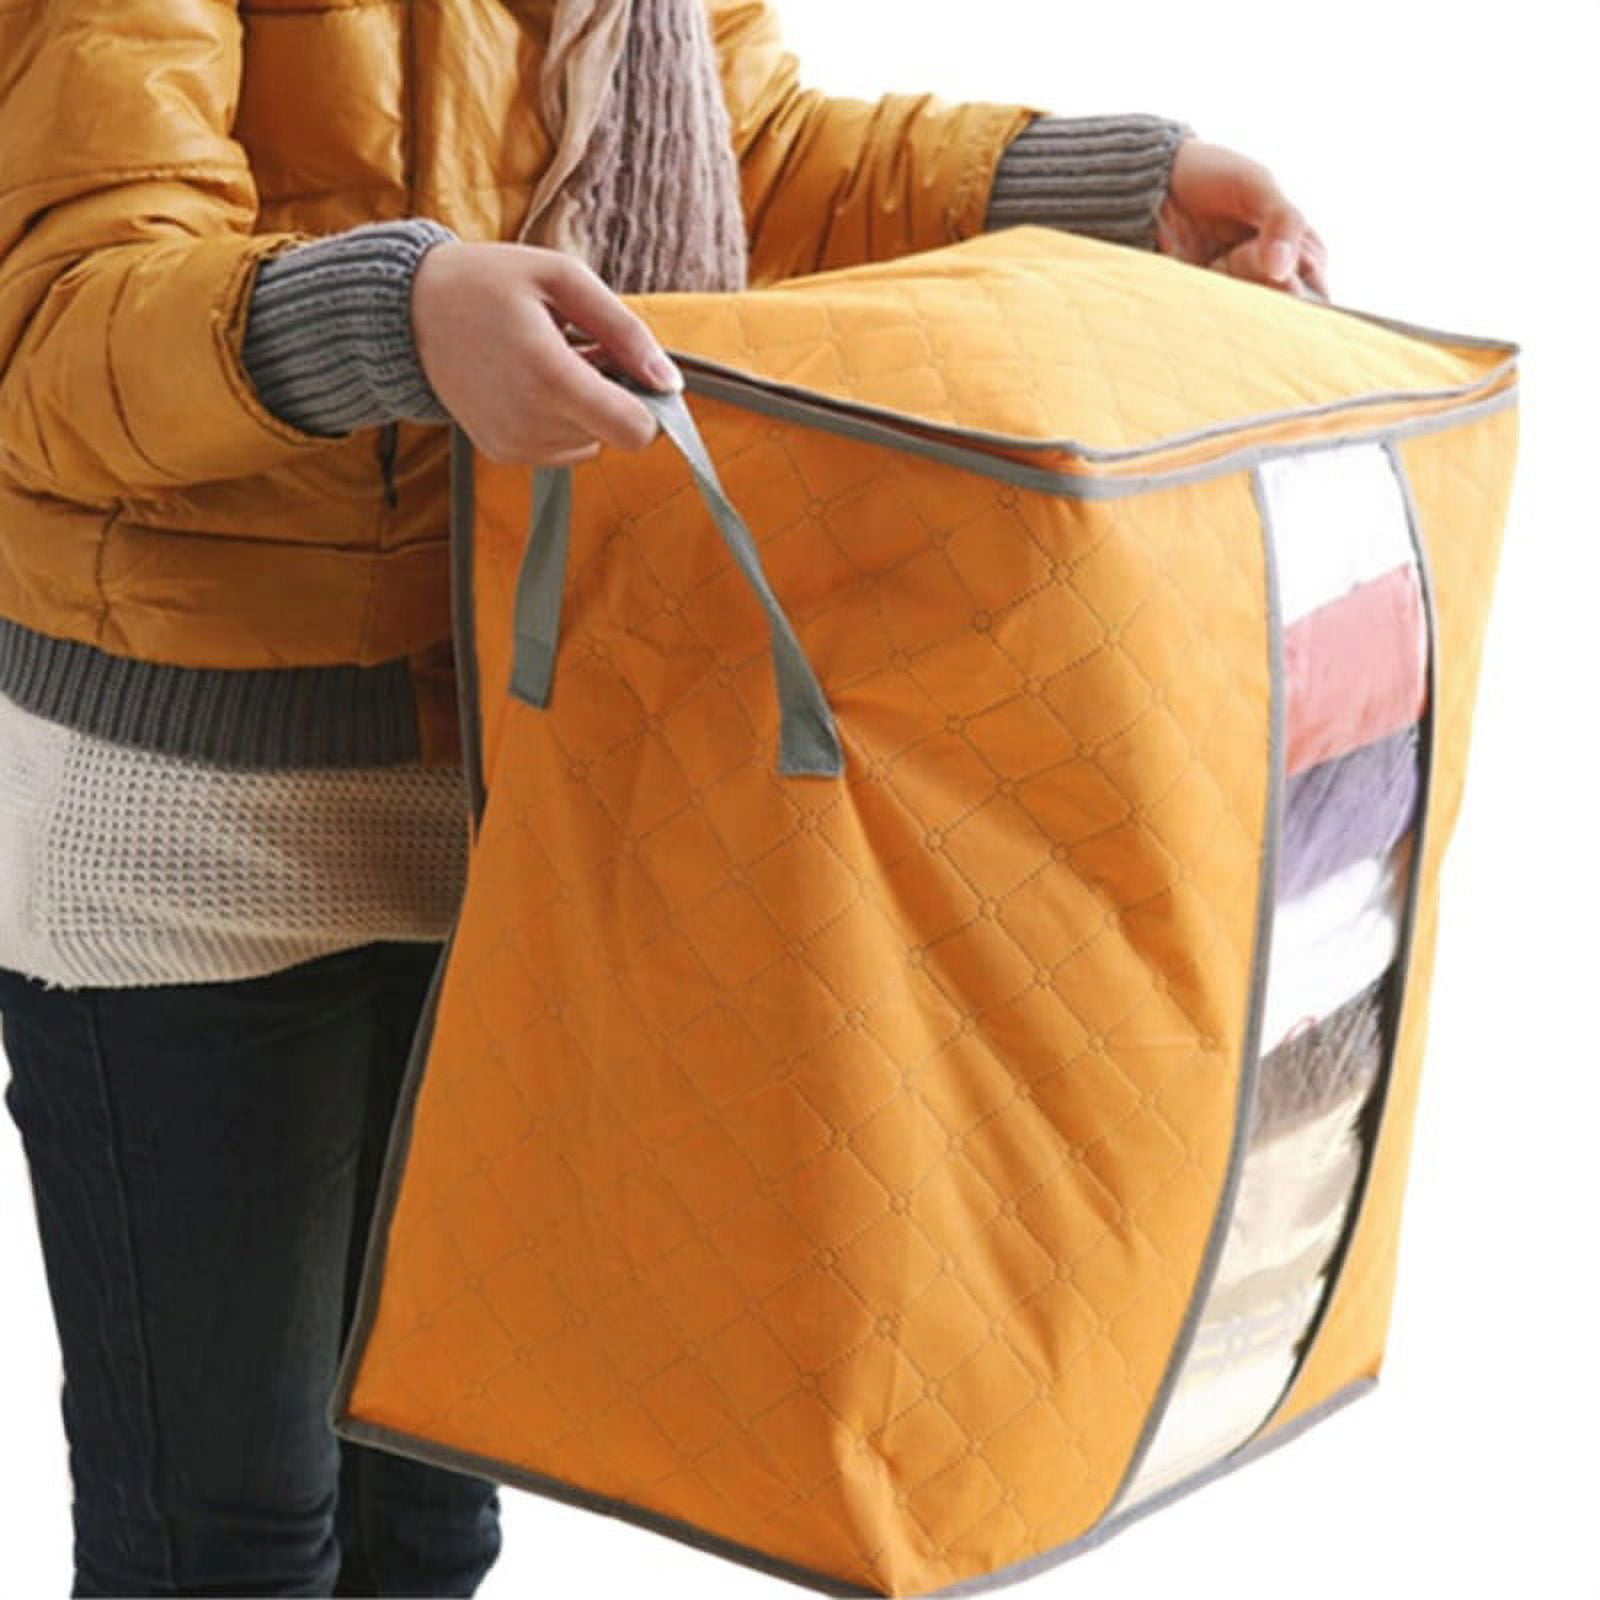 10Pcs Portable Transparent Clothes Socks Storage Zipper Bag Container  Organizer - Bed Bath & Beyond - 35815158